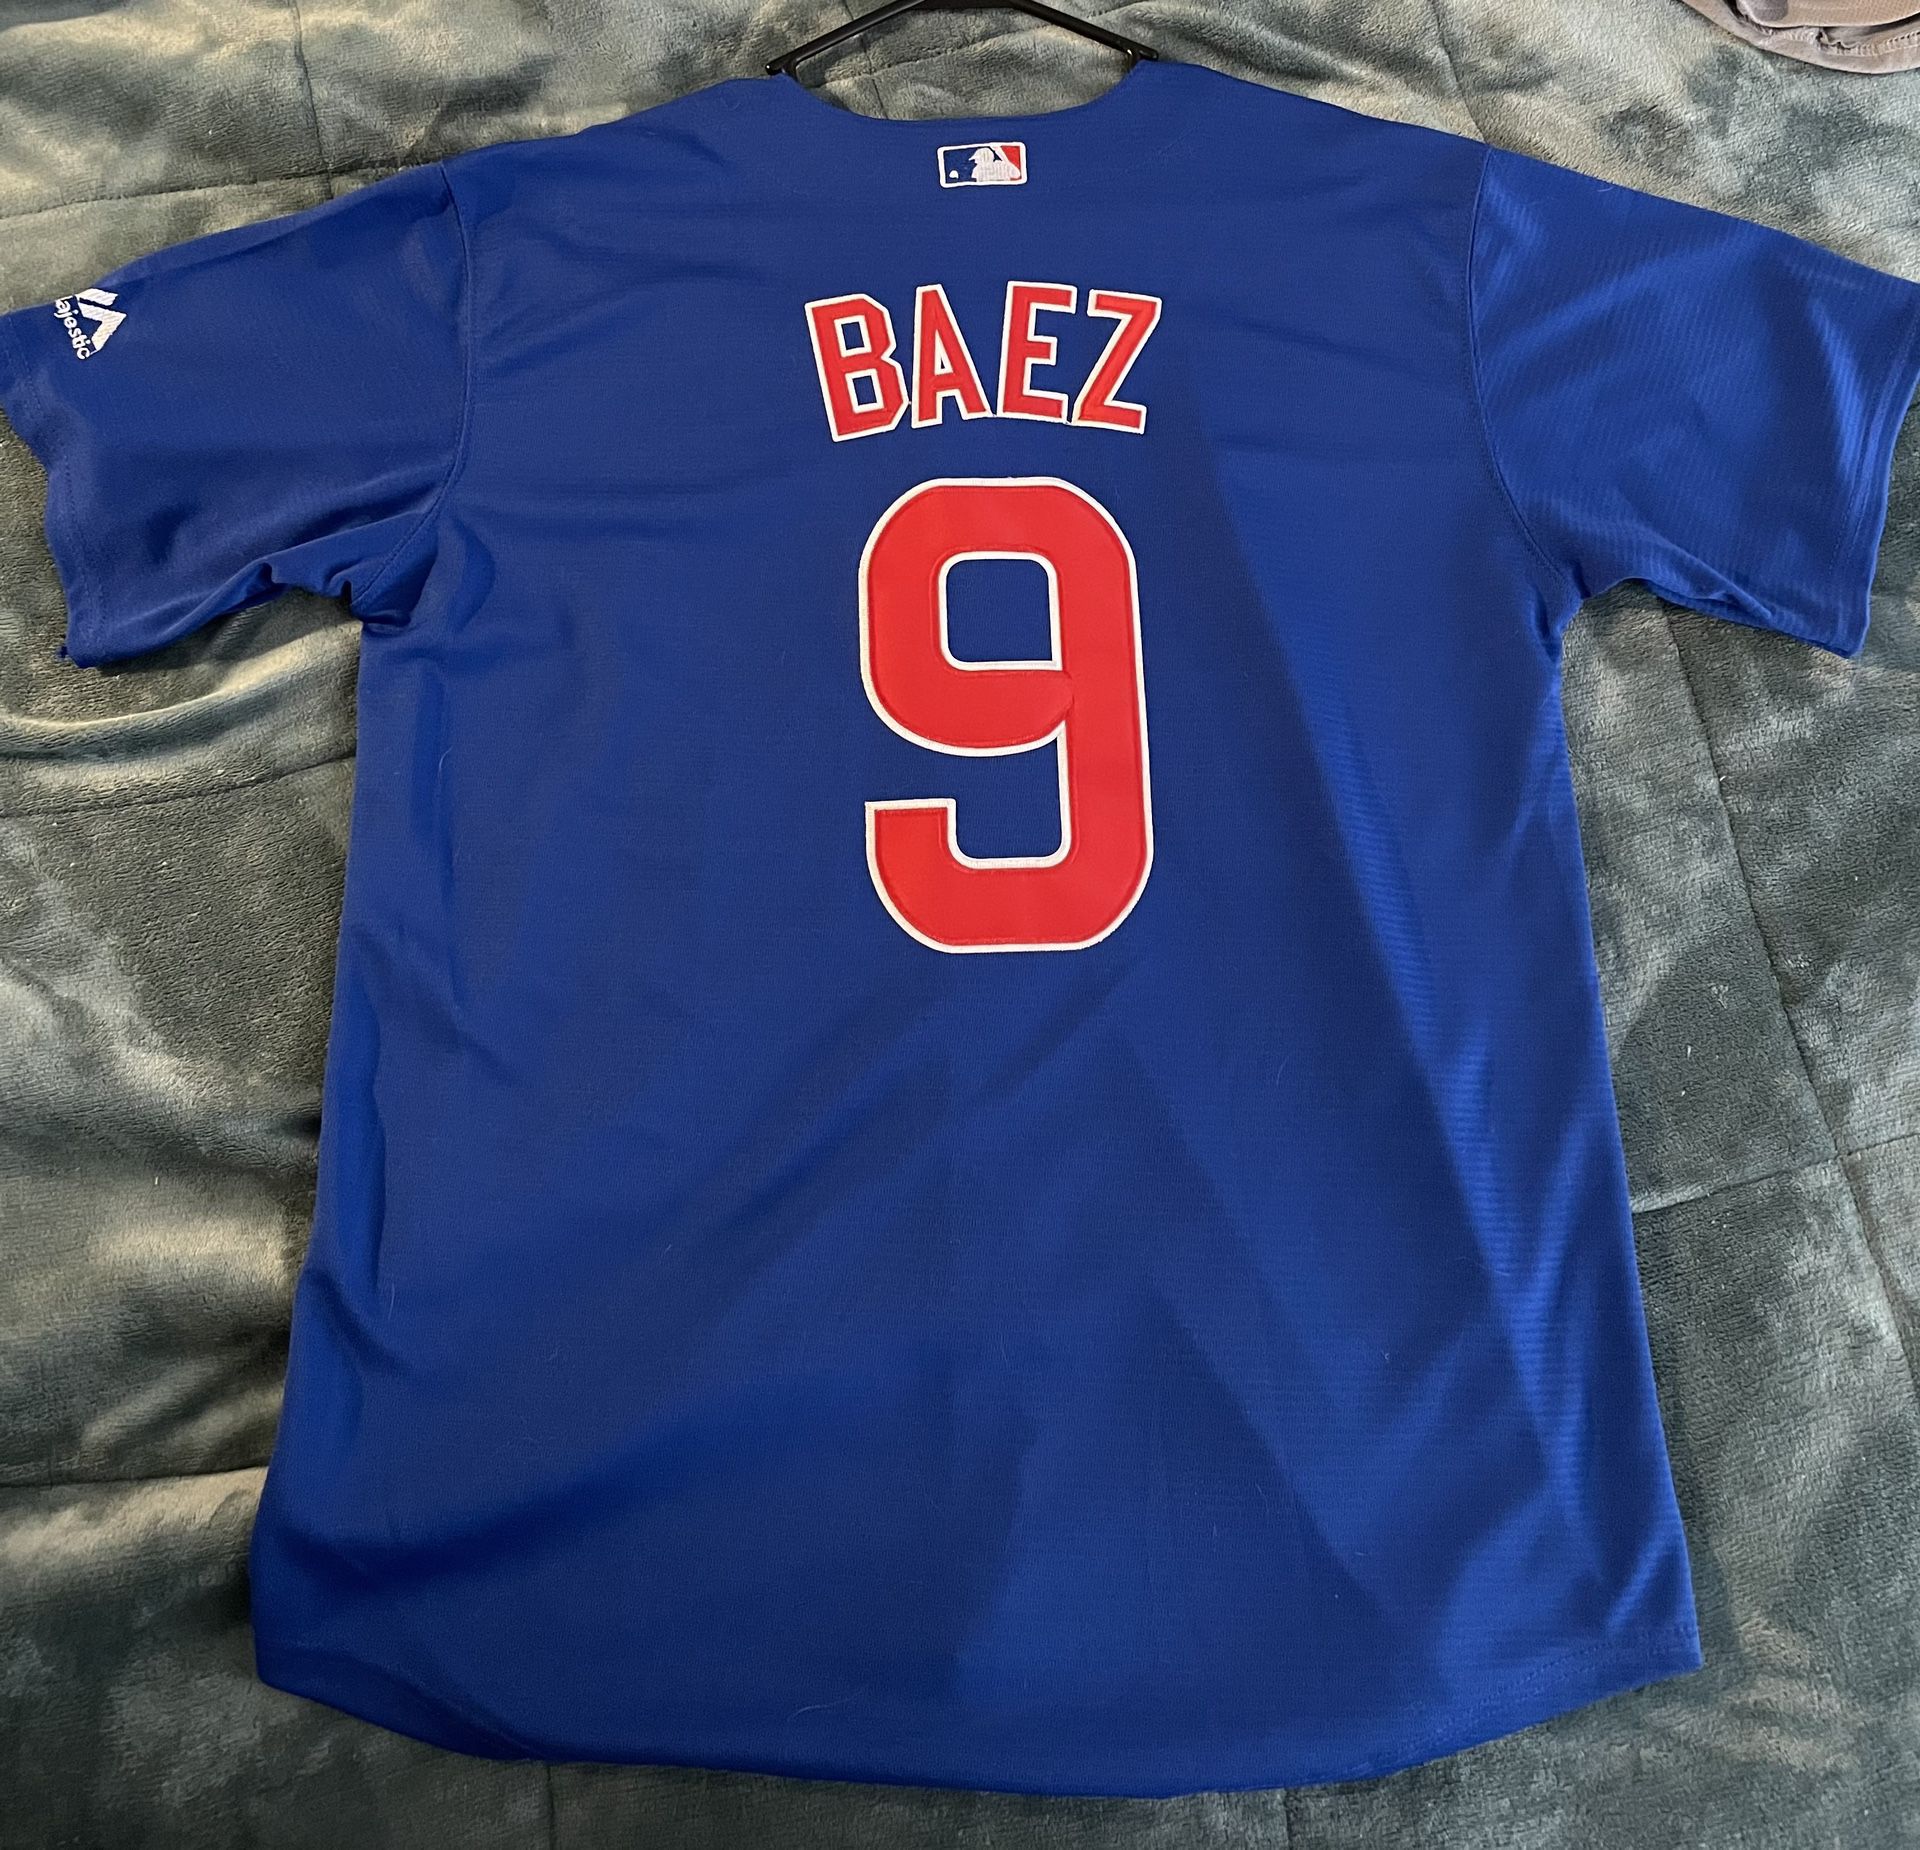 Cubs Javier Baez Jersey for Sale in Chandler, AZ - OfferUp